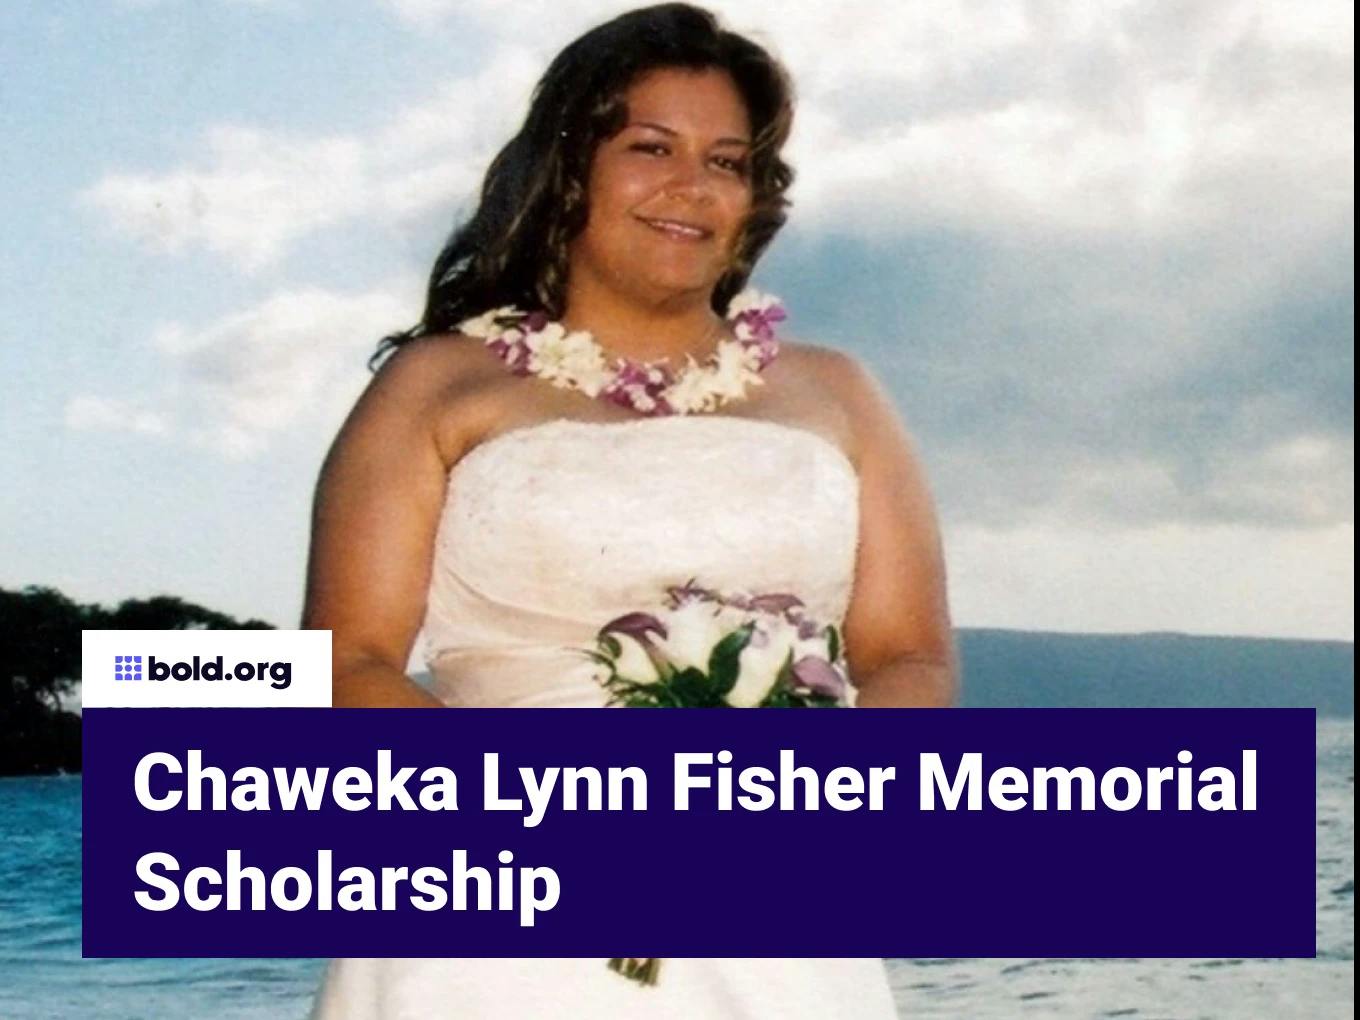 Chaweka Lynn Fisher Memorial Scholarship